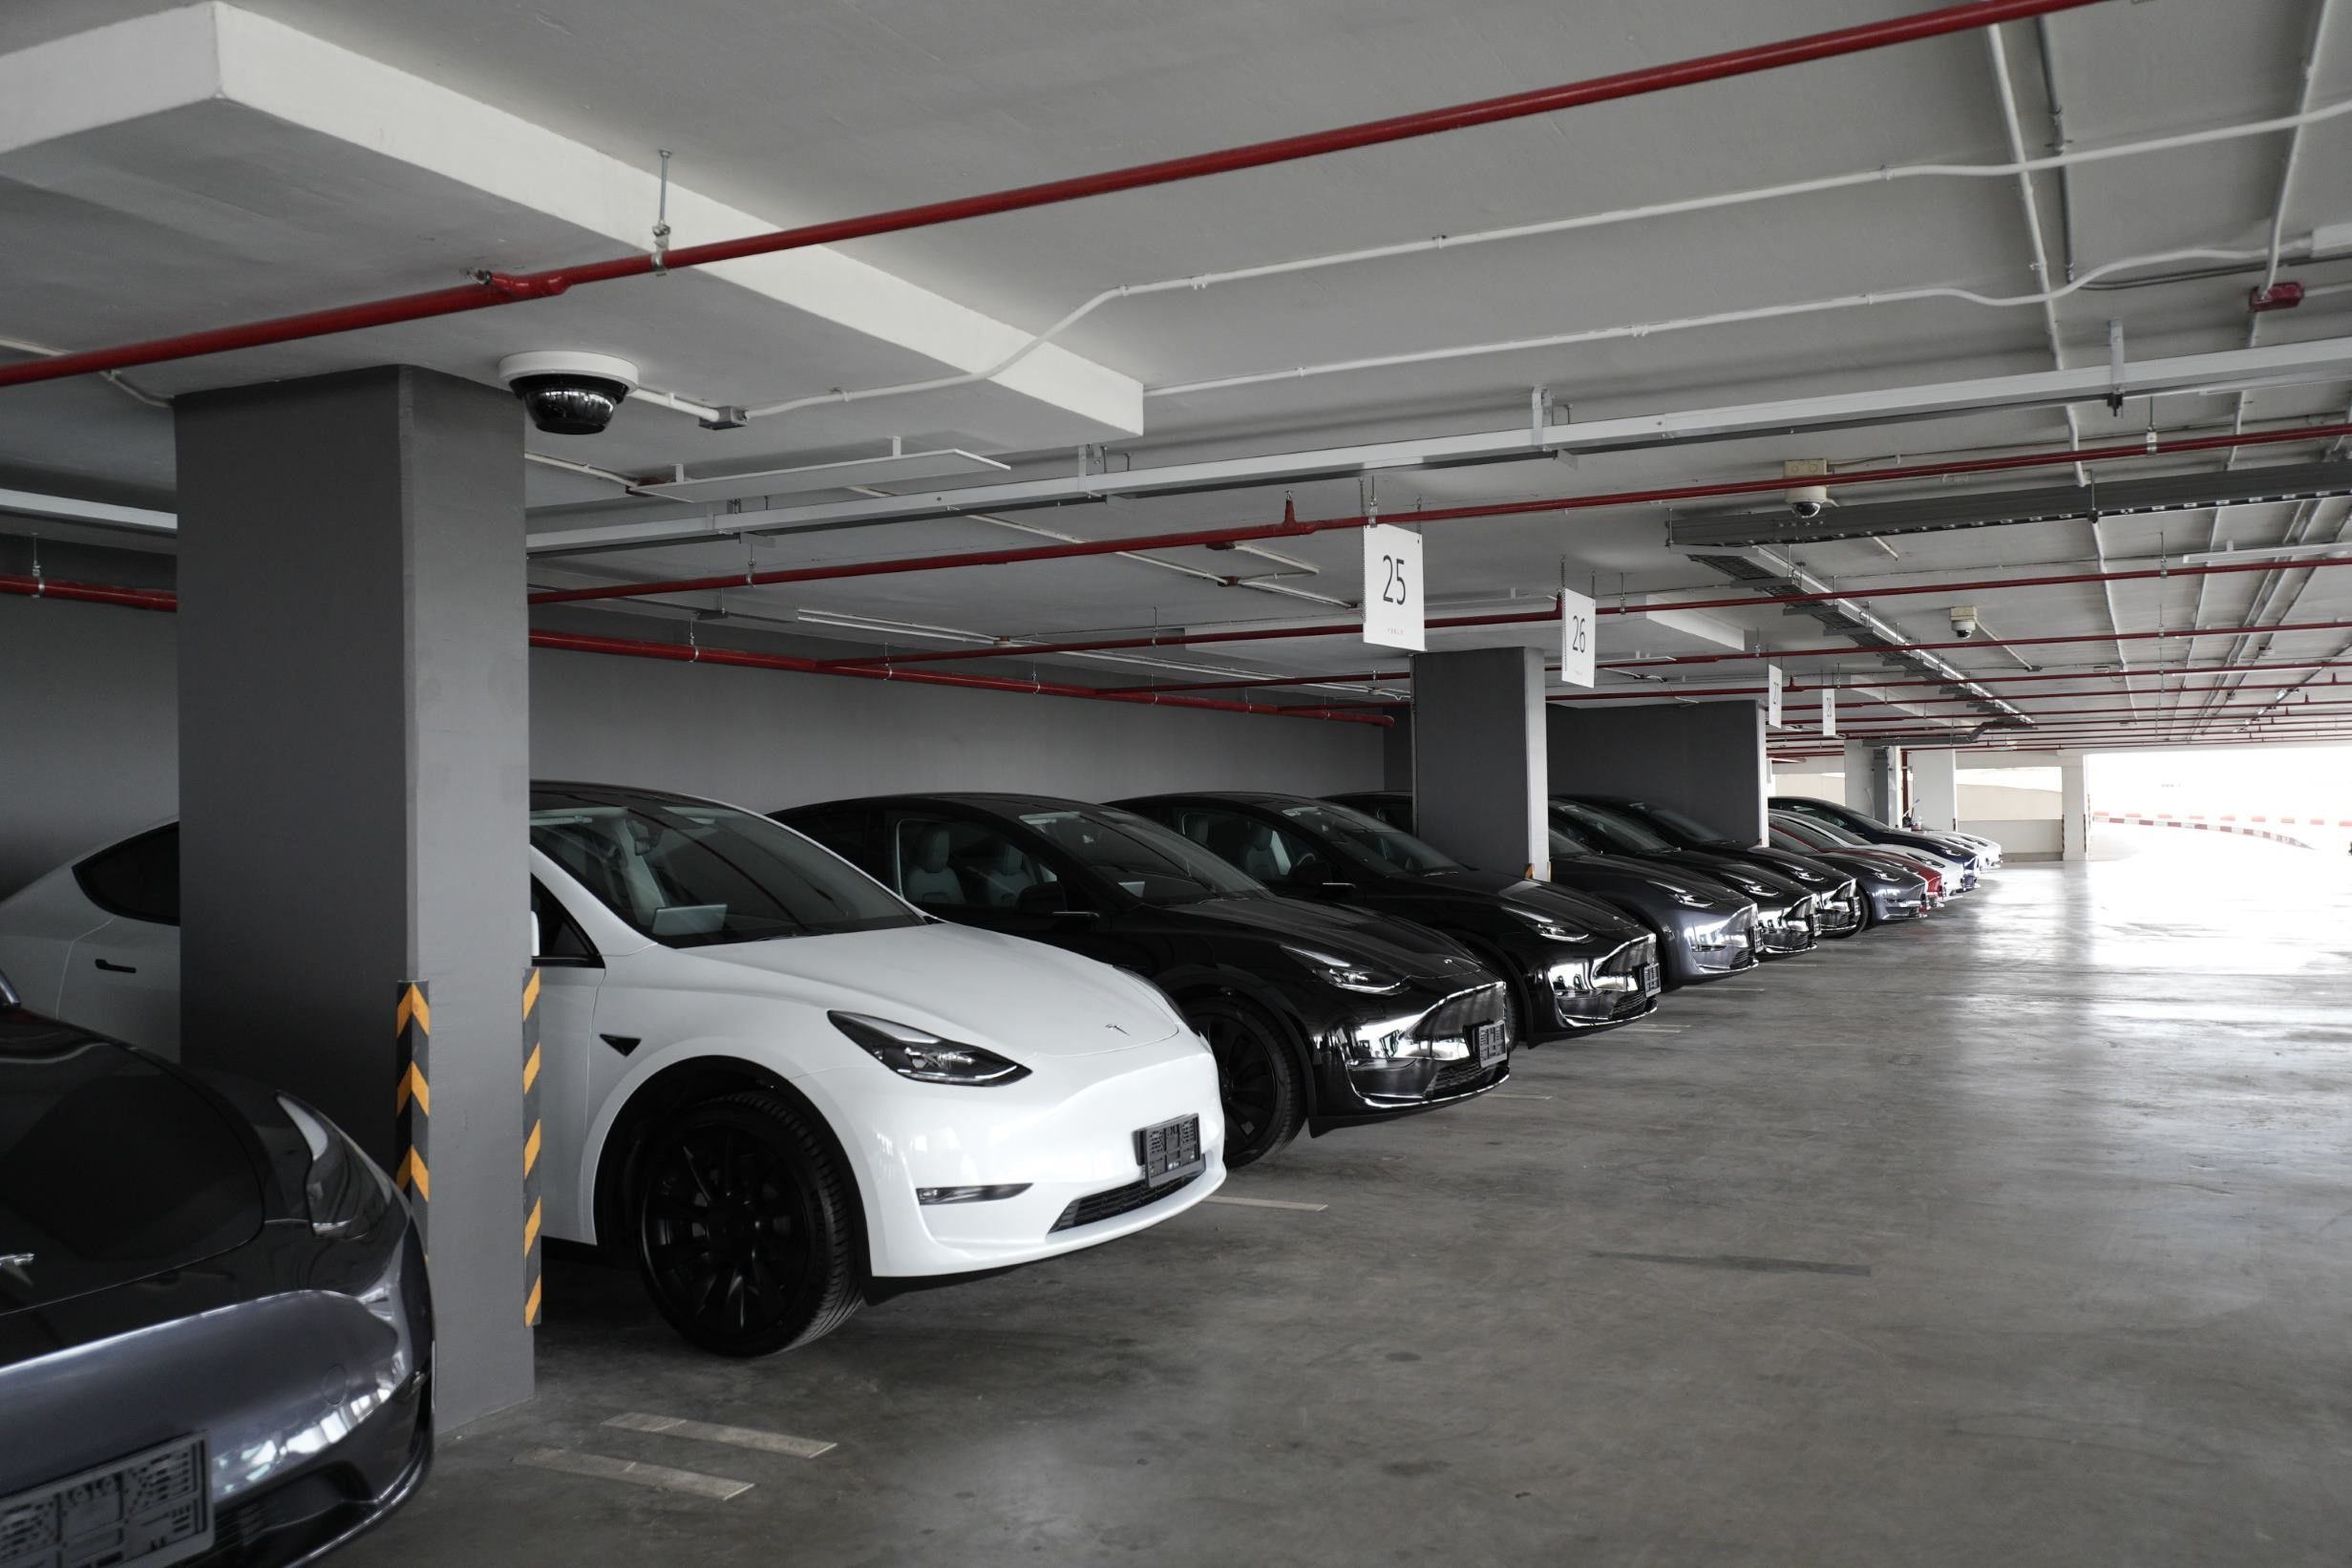 Tesla เปิดศูนย์บริการแห่งแรกในไทยอย่างเป็นทางการ ที่รามคำแหง พร้อมขยายสถานี Supercharging ทั่วประเทศ